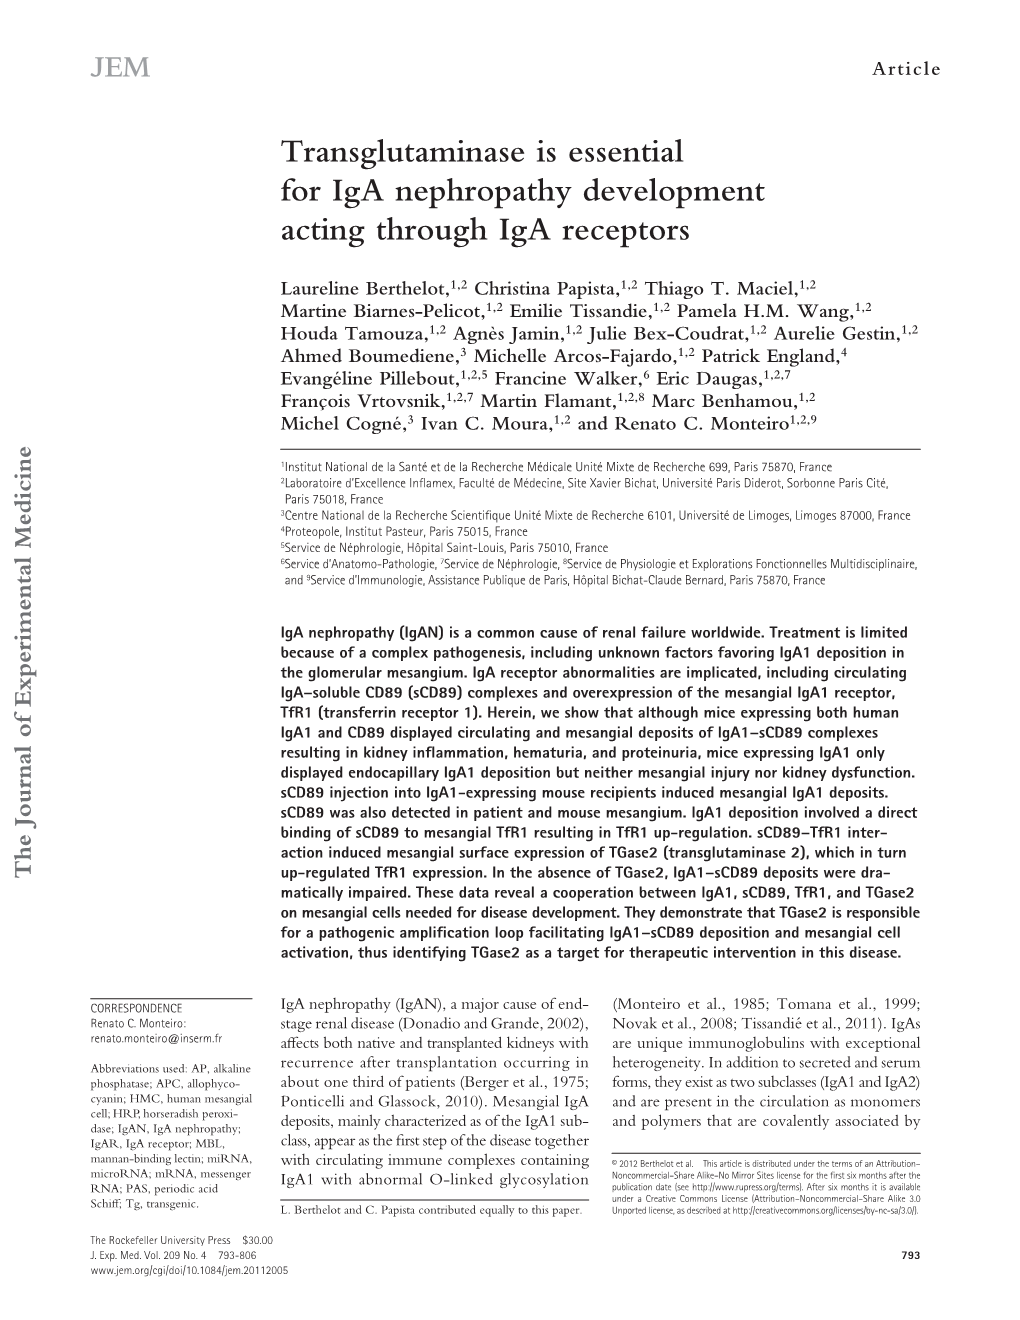 Transglutaminase Is Essential for Iga Nephropathy Development Acting Through Iga Receptors